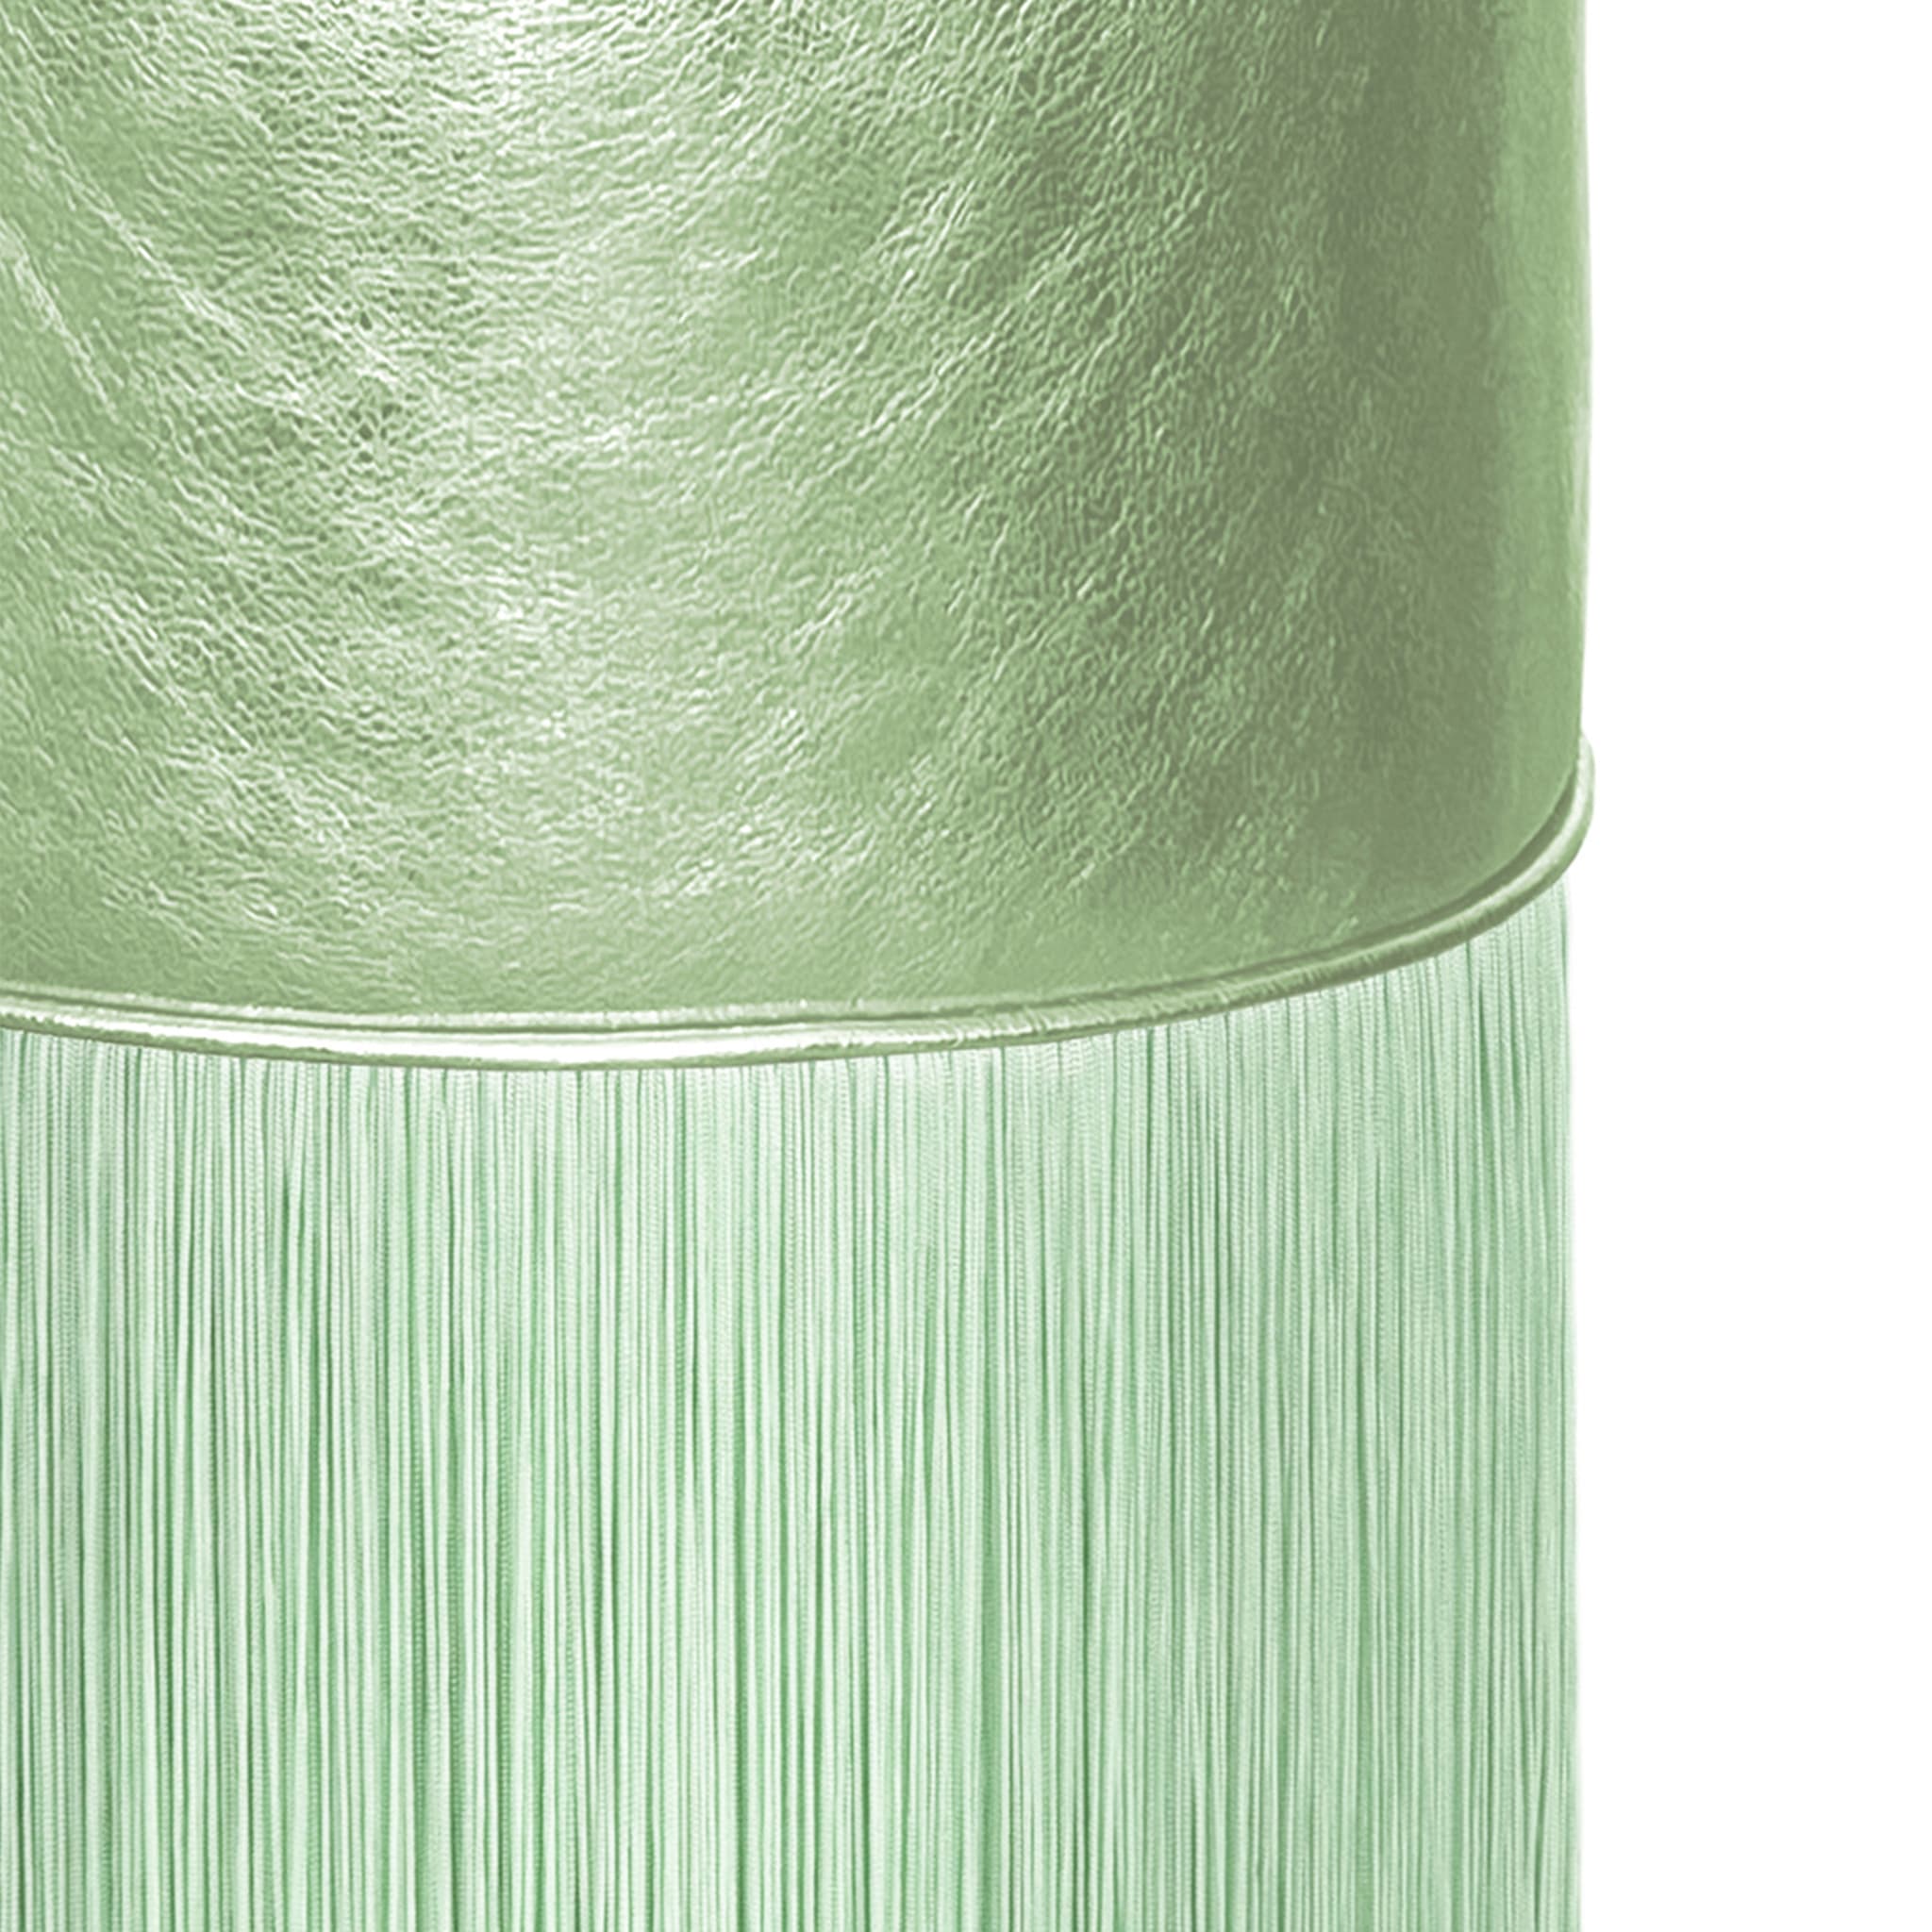 Gleaming Light Green Metallic Leather Pouf by Lorenza Bozzoli - Alternative view 1